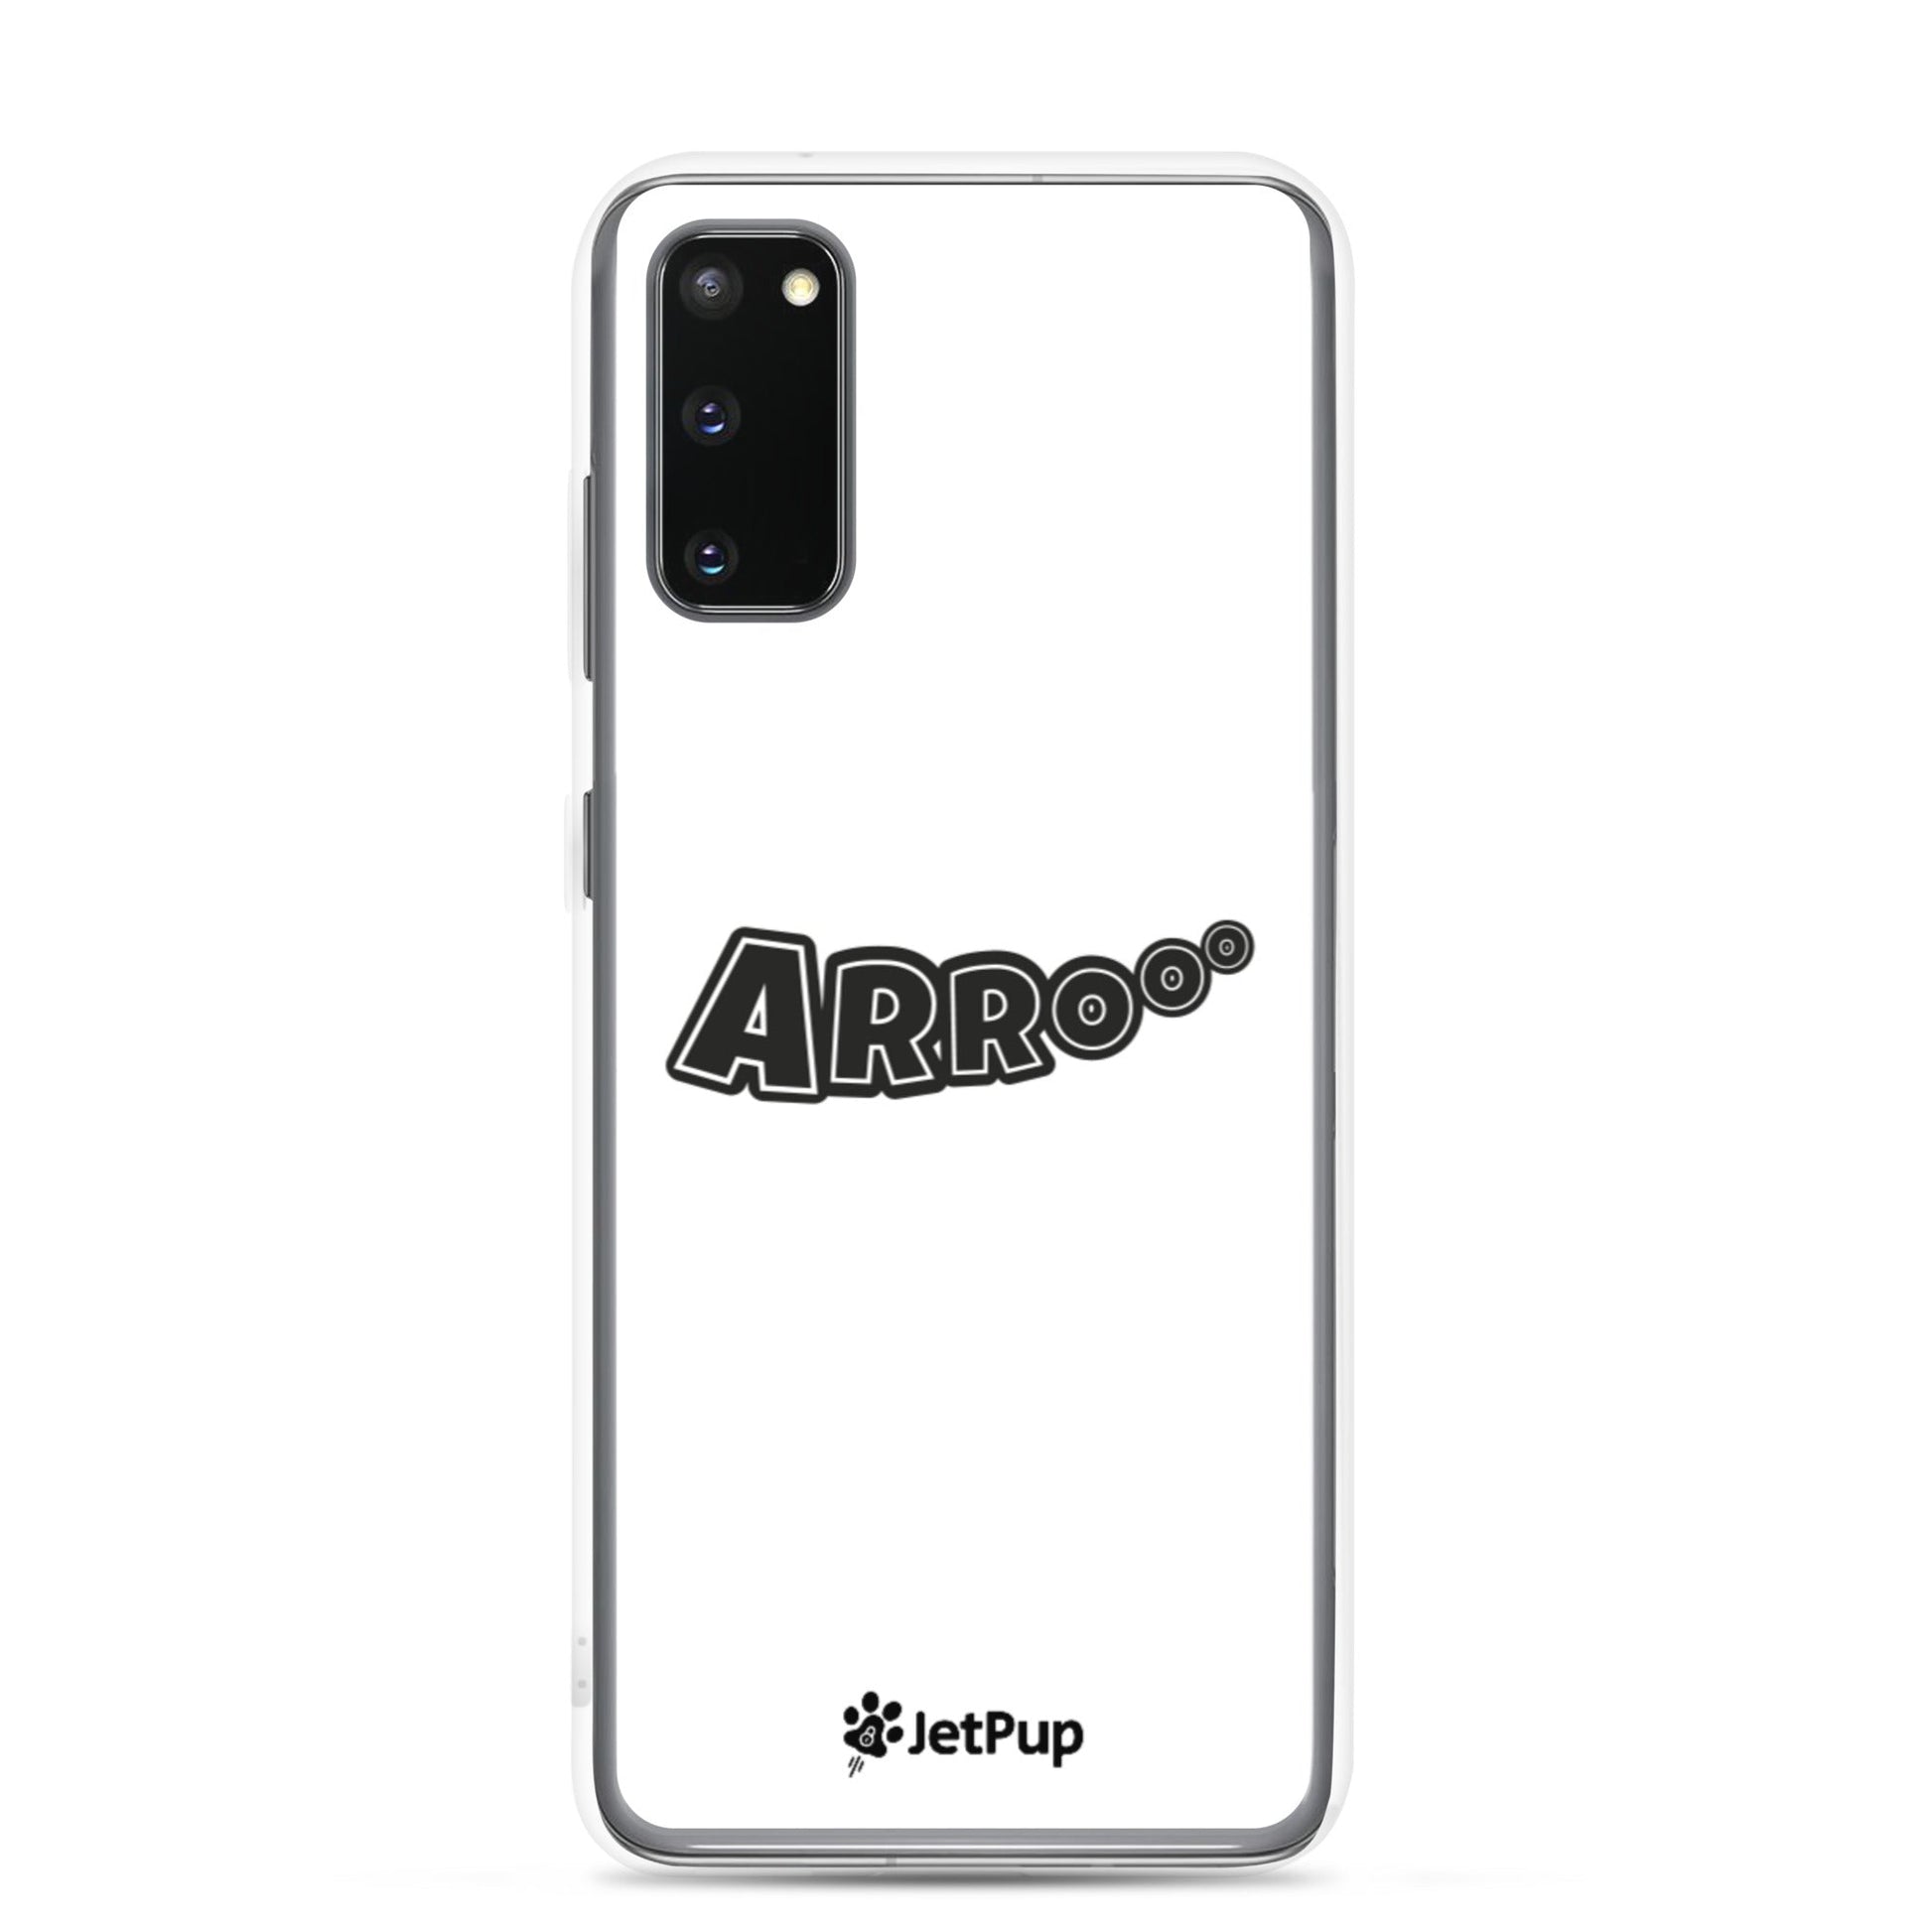 Arrooo Samsung Case - White - JetPup